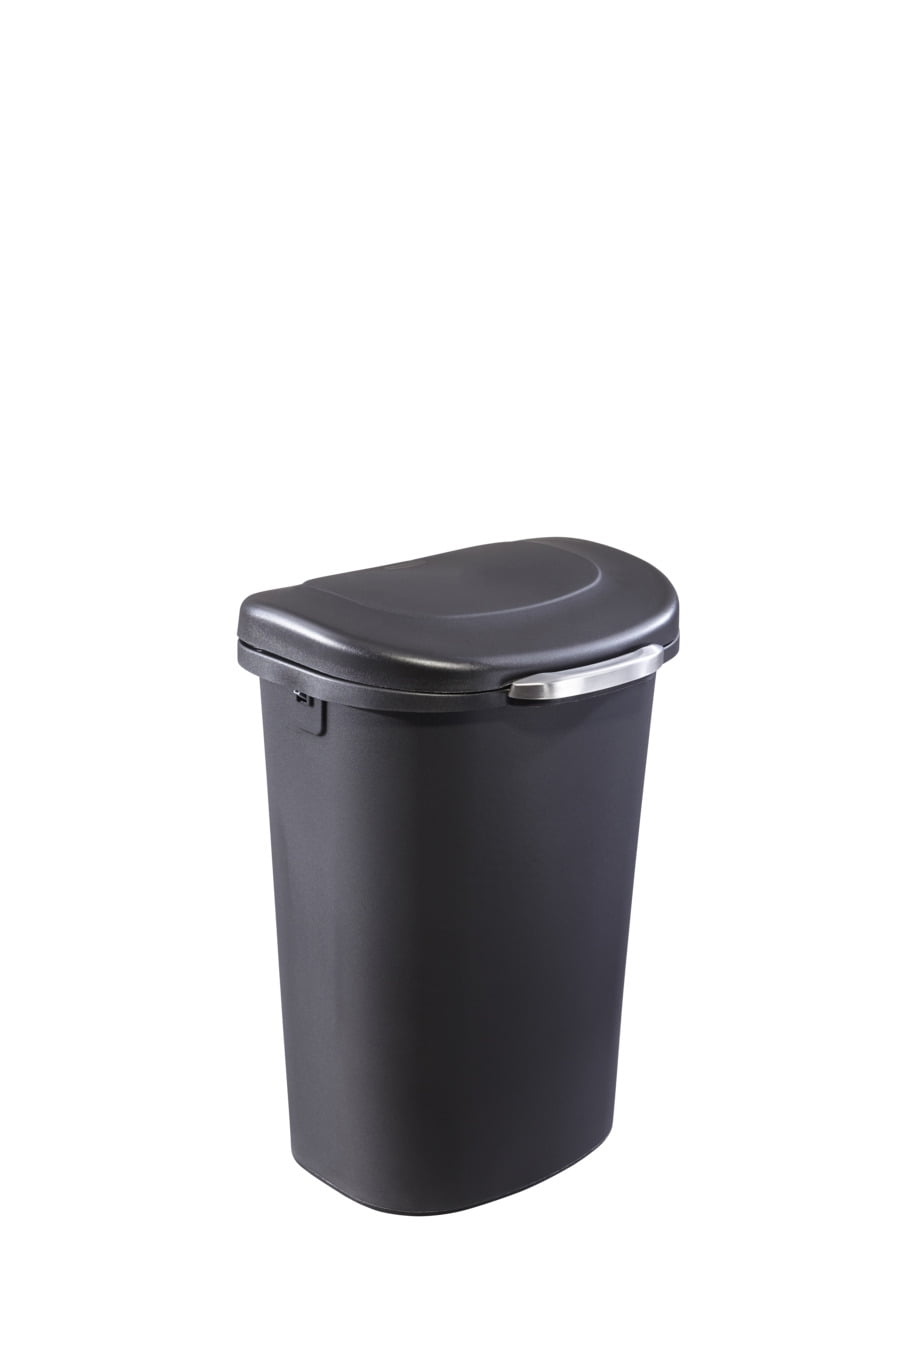 Rubbermaid® Soft Molded Plastic Small Wastebasket, 13-5/8 Gallon